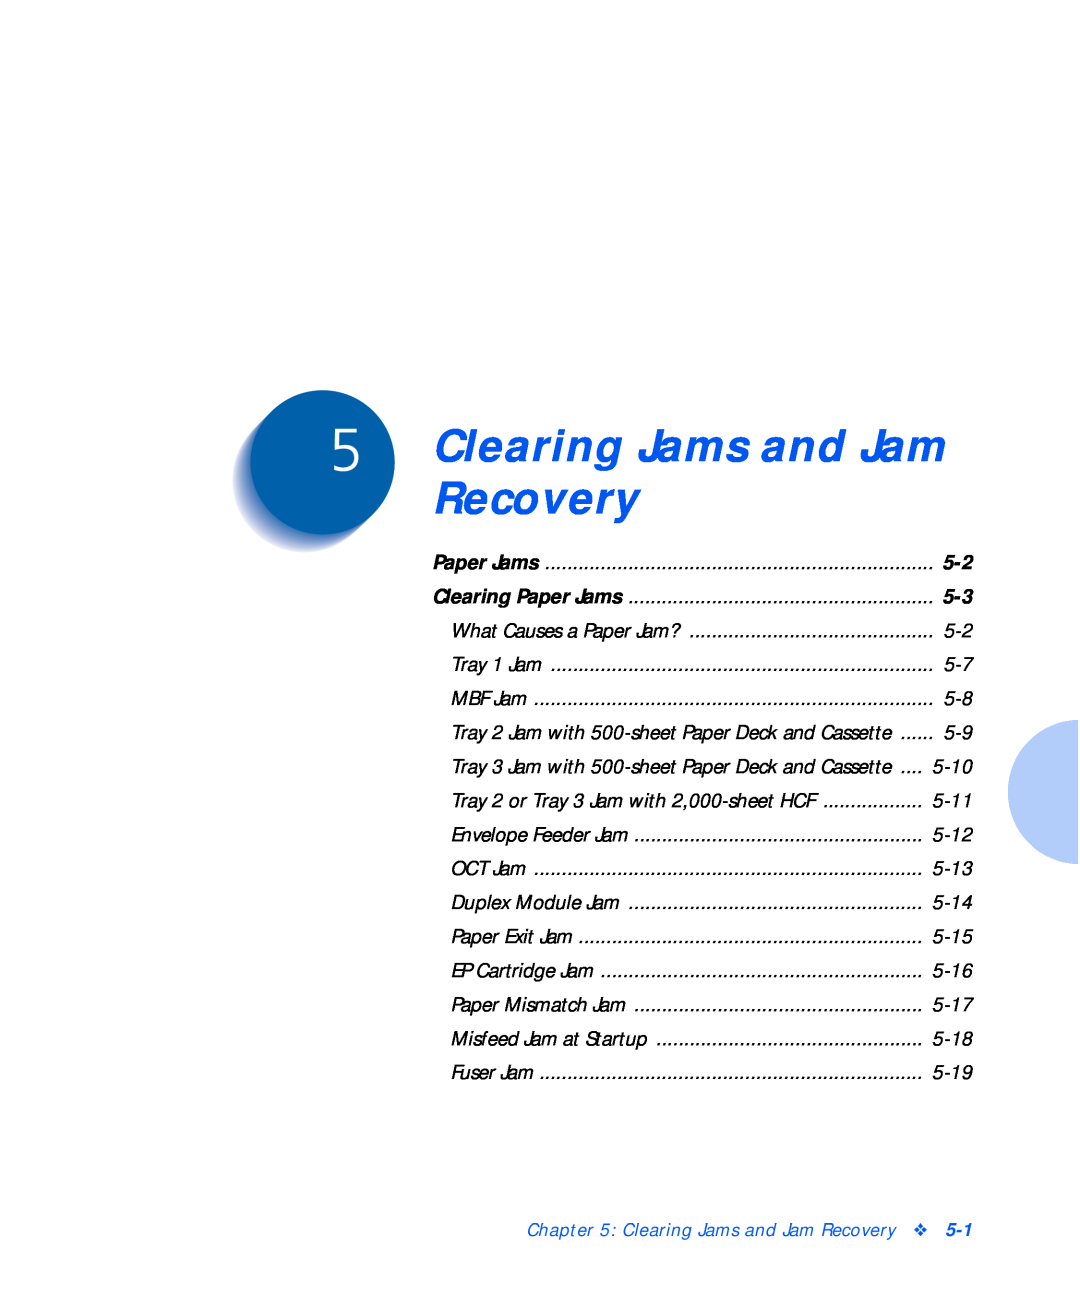 Xerox N17b manual Clearing Jams and Jam Recovery 